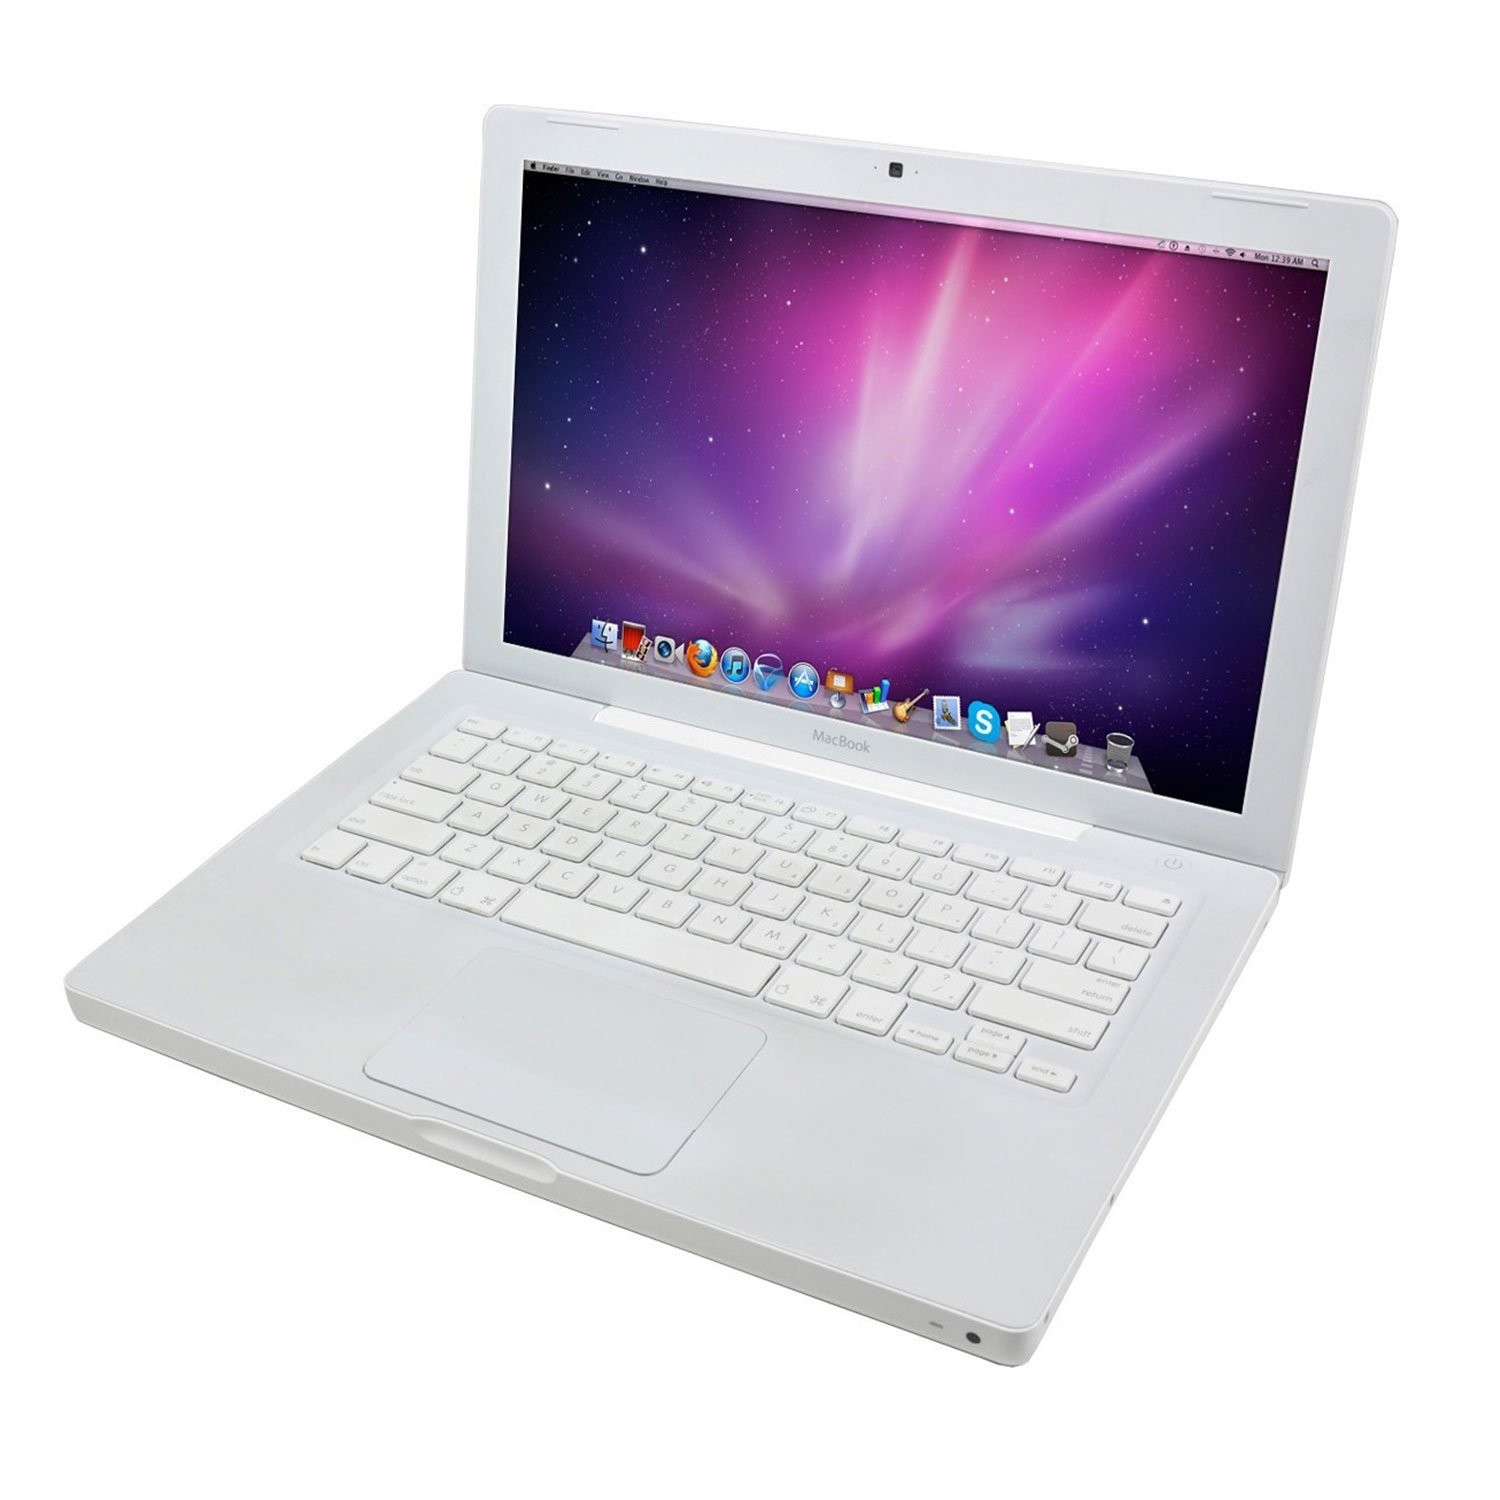 Macbook a1181 software